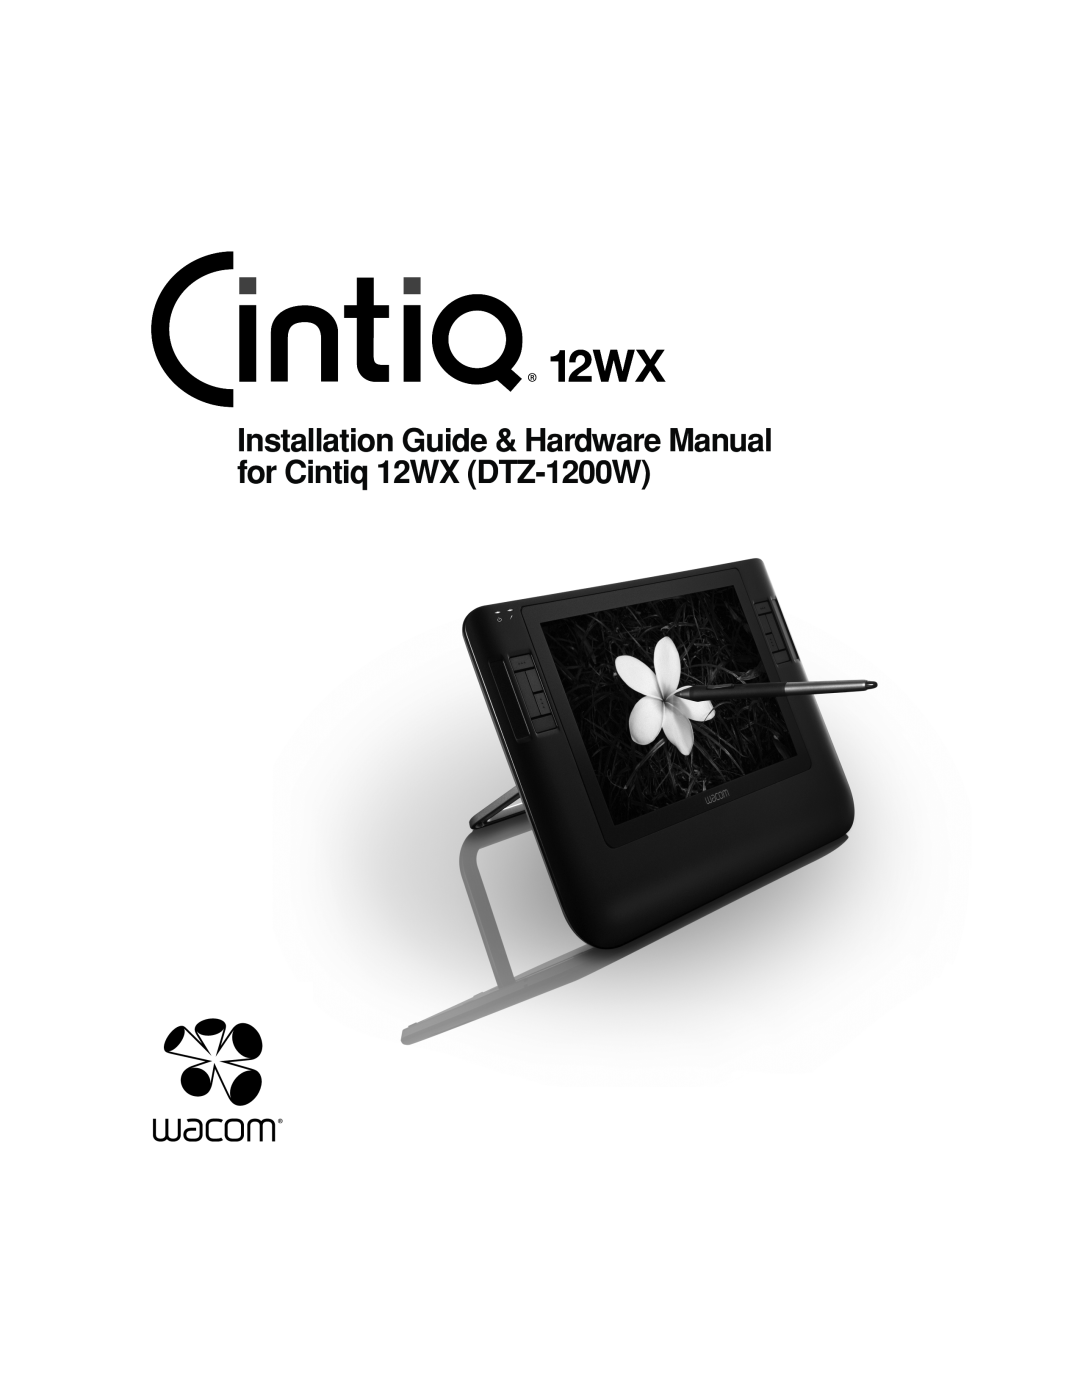 Wacom manual Installation Guide & Hardware Manual for Cintiq 12WX DTZ-1200W 